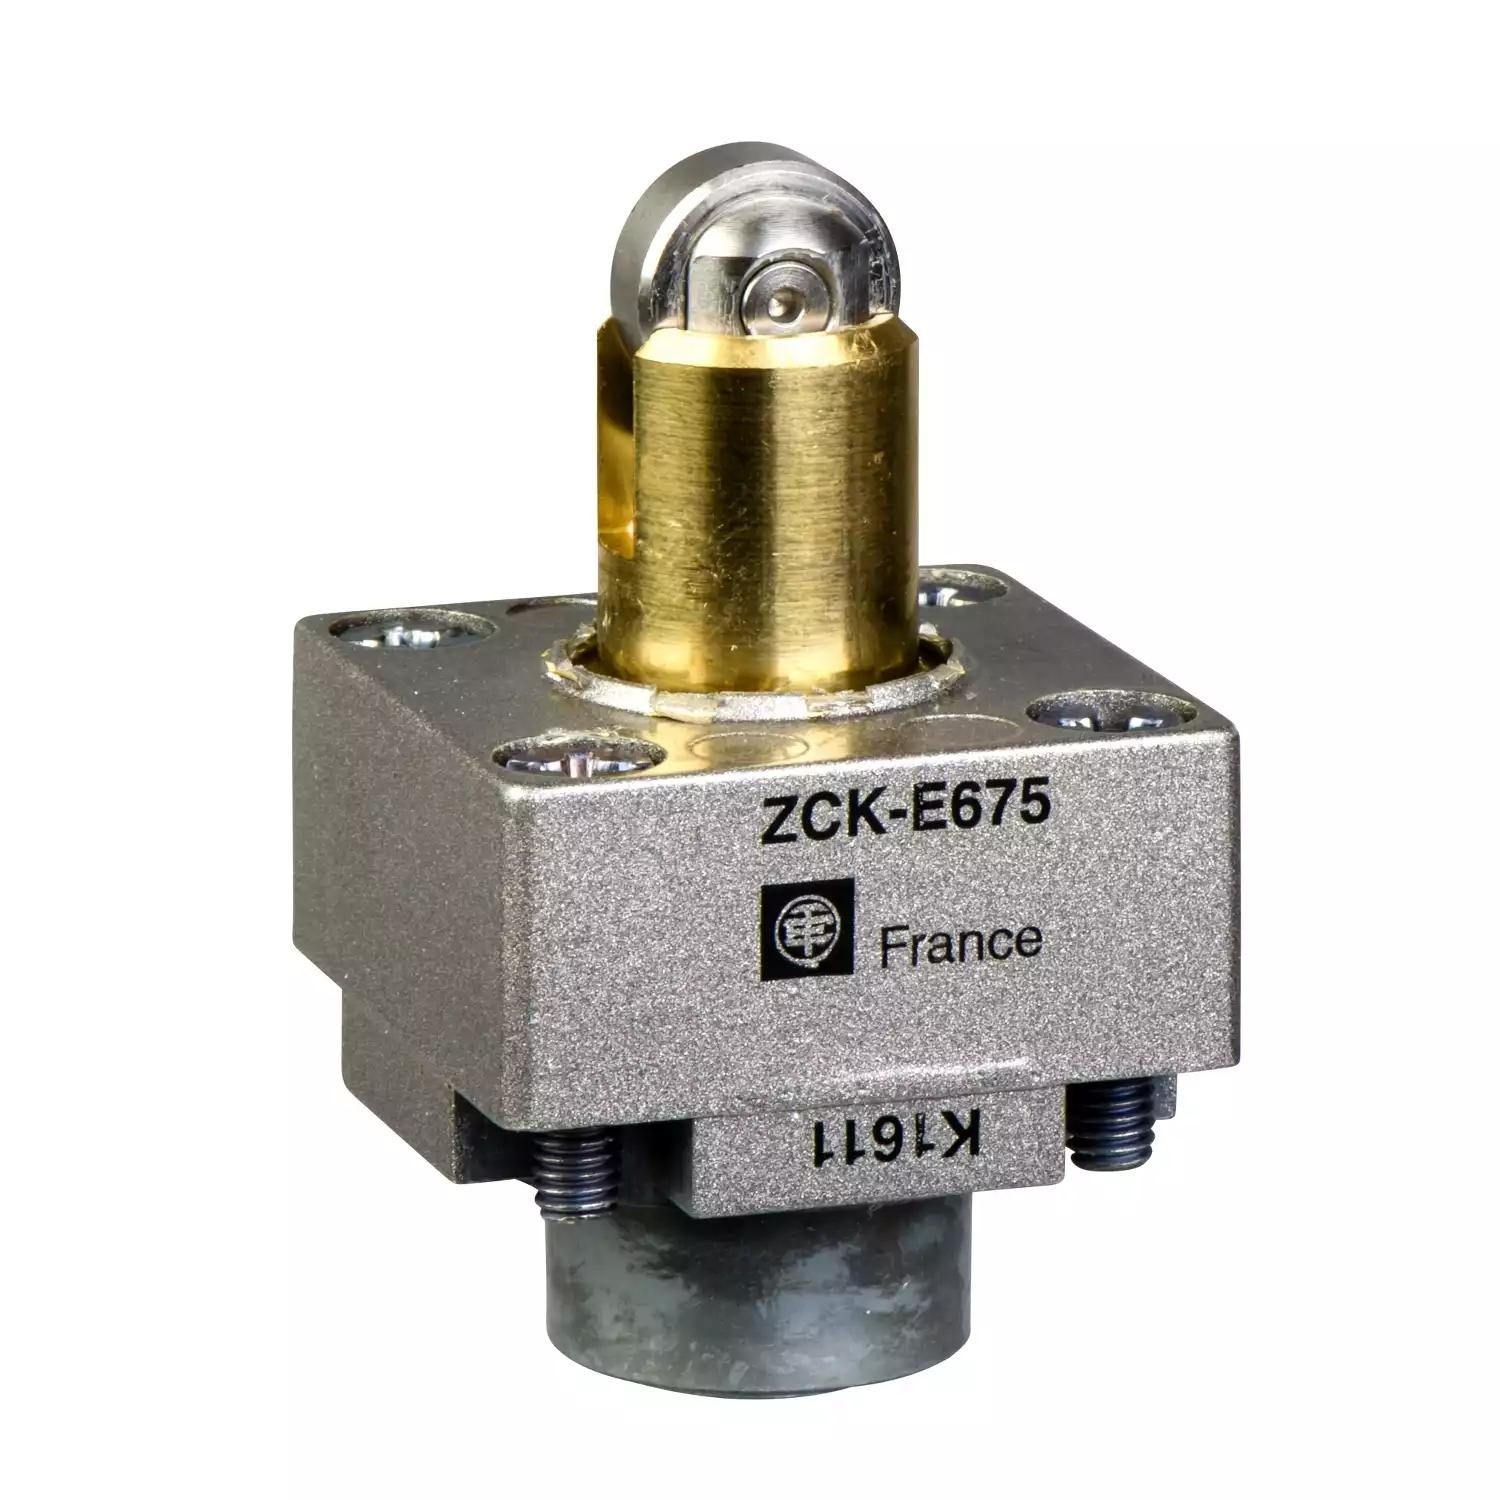 Limit switch head, Limit switches XC Standard, ZCKE, steel roller plunger reinforced